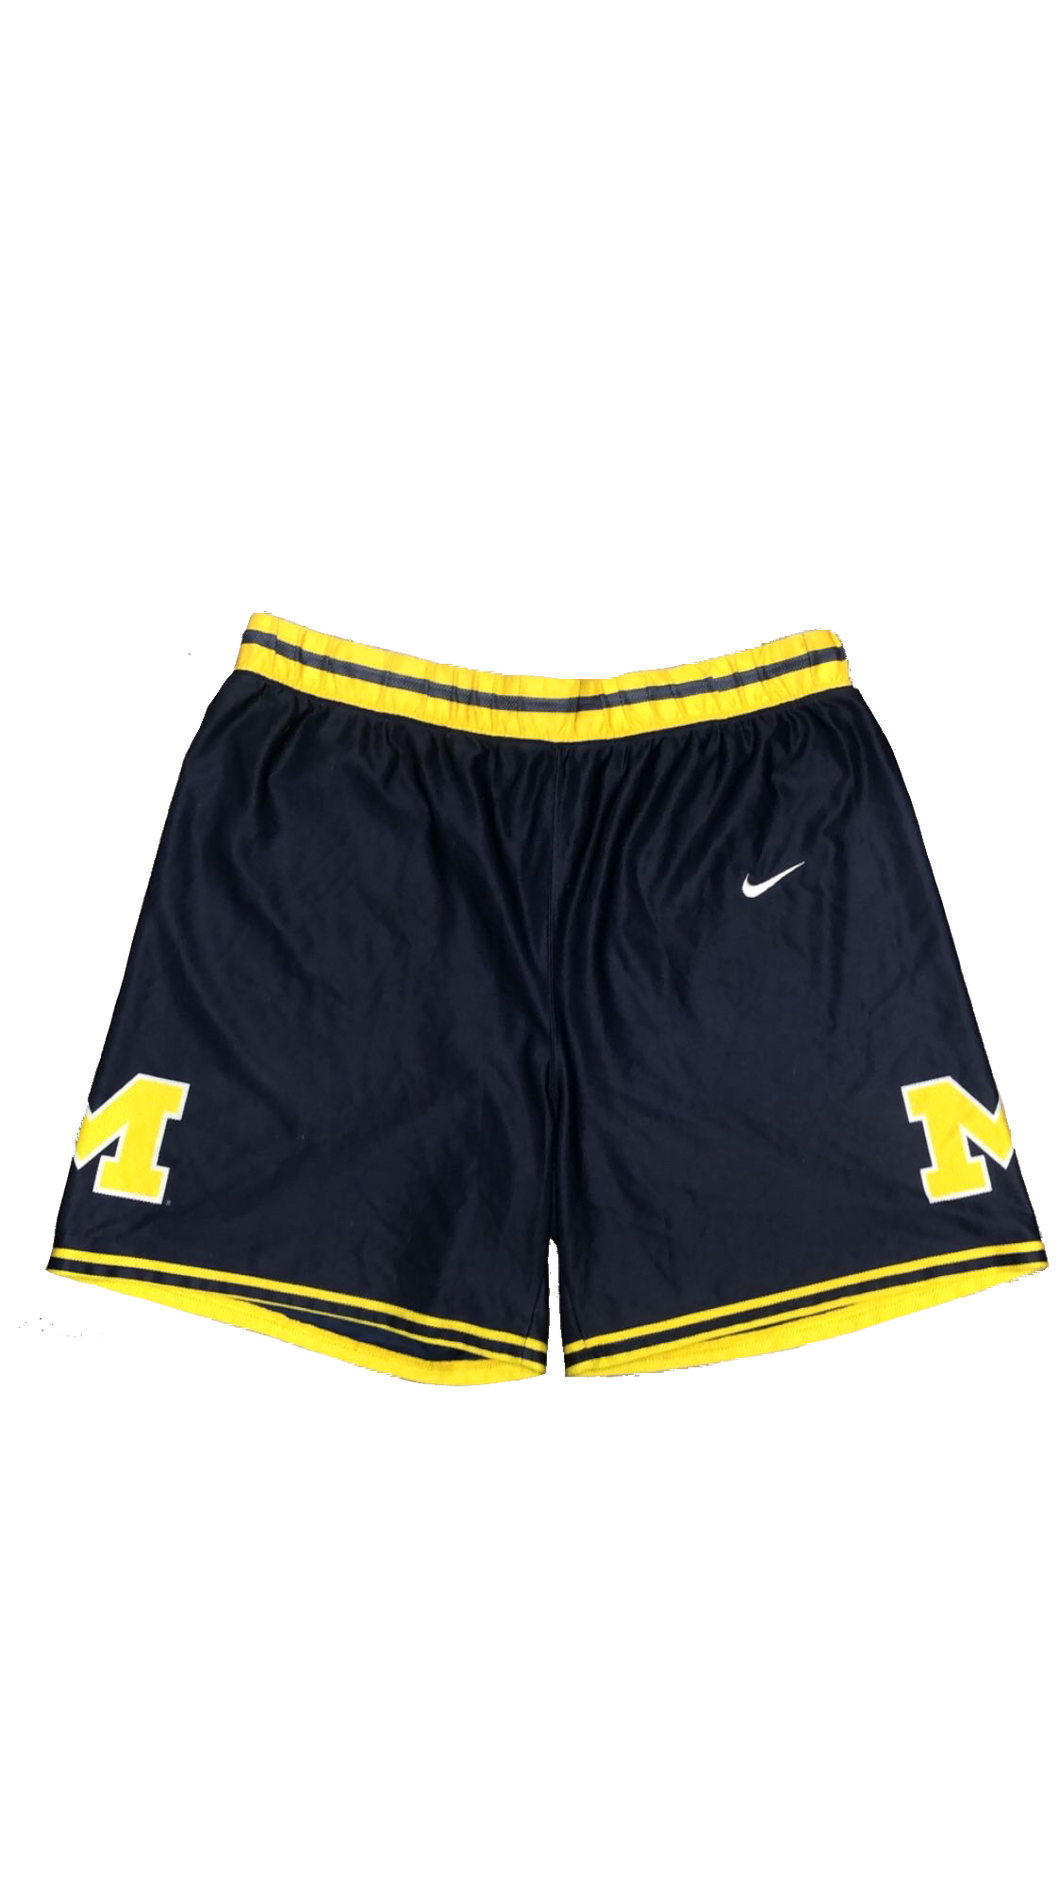 Vintage “Michigan Fab Five” Nike basketball shorts